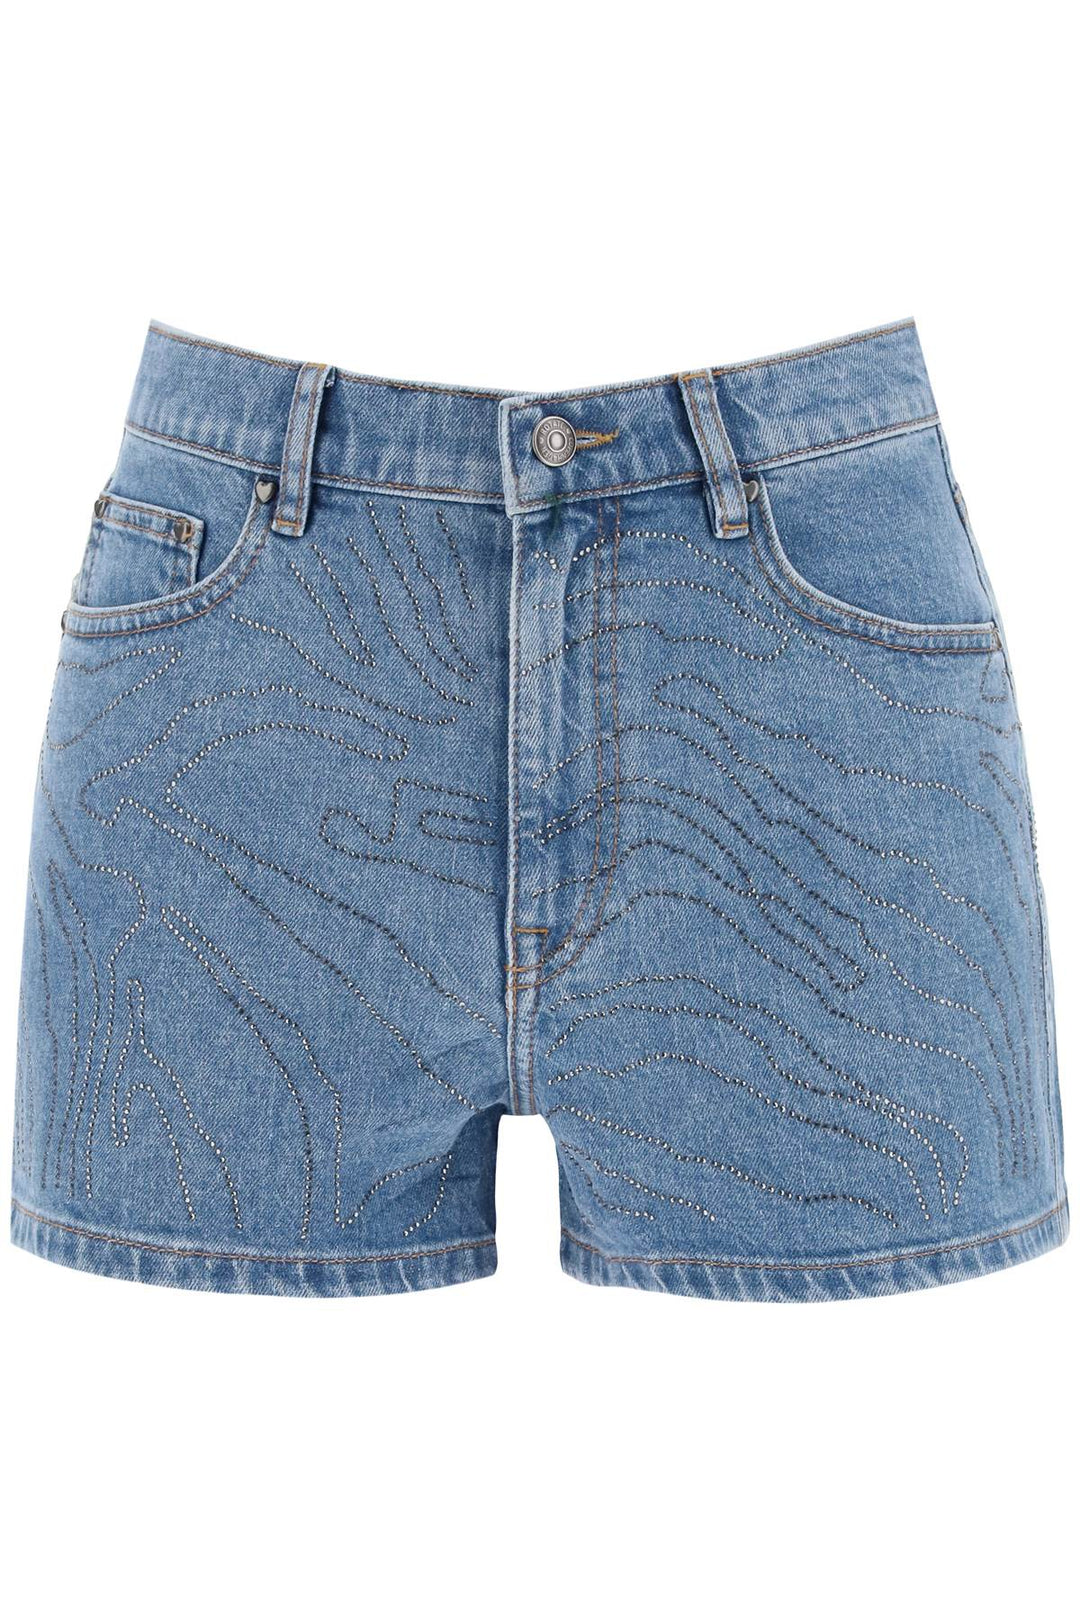 denim shorts with rhinestone-0